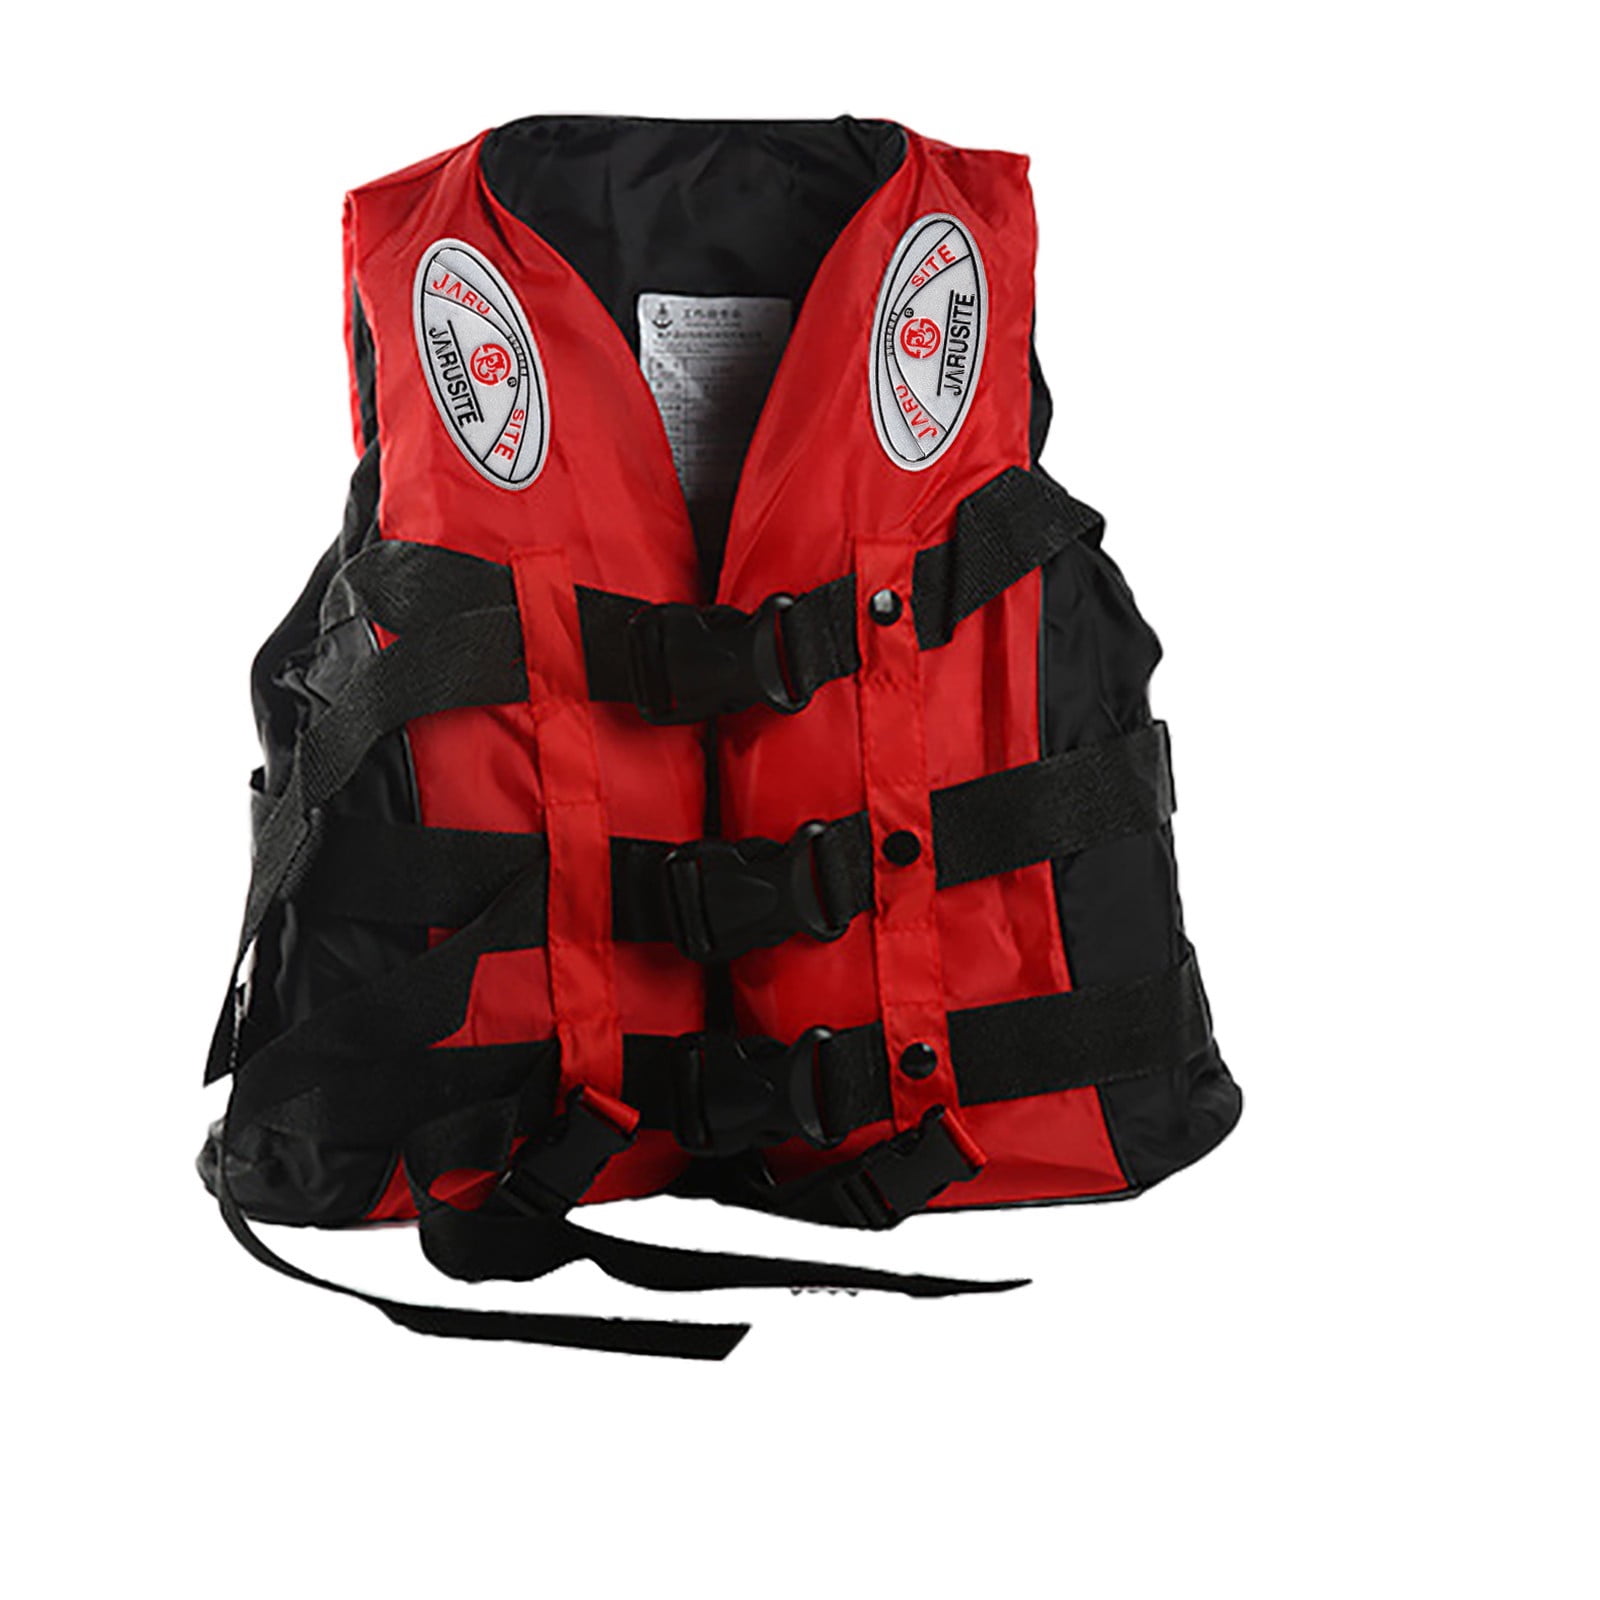 Adult Kids Boy Life Jacket Kayak Ski Buoyancy Aid Vest Sailing Watersport S-XXXL 